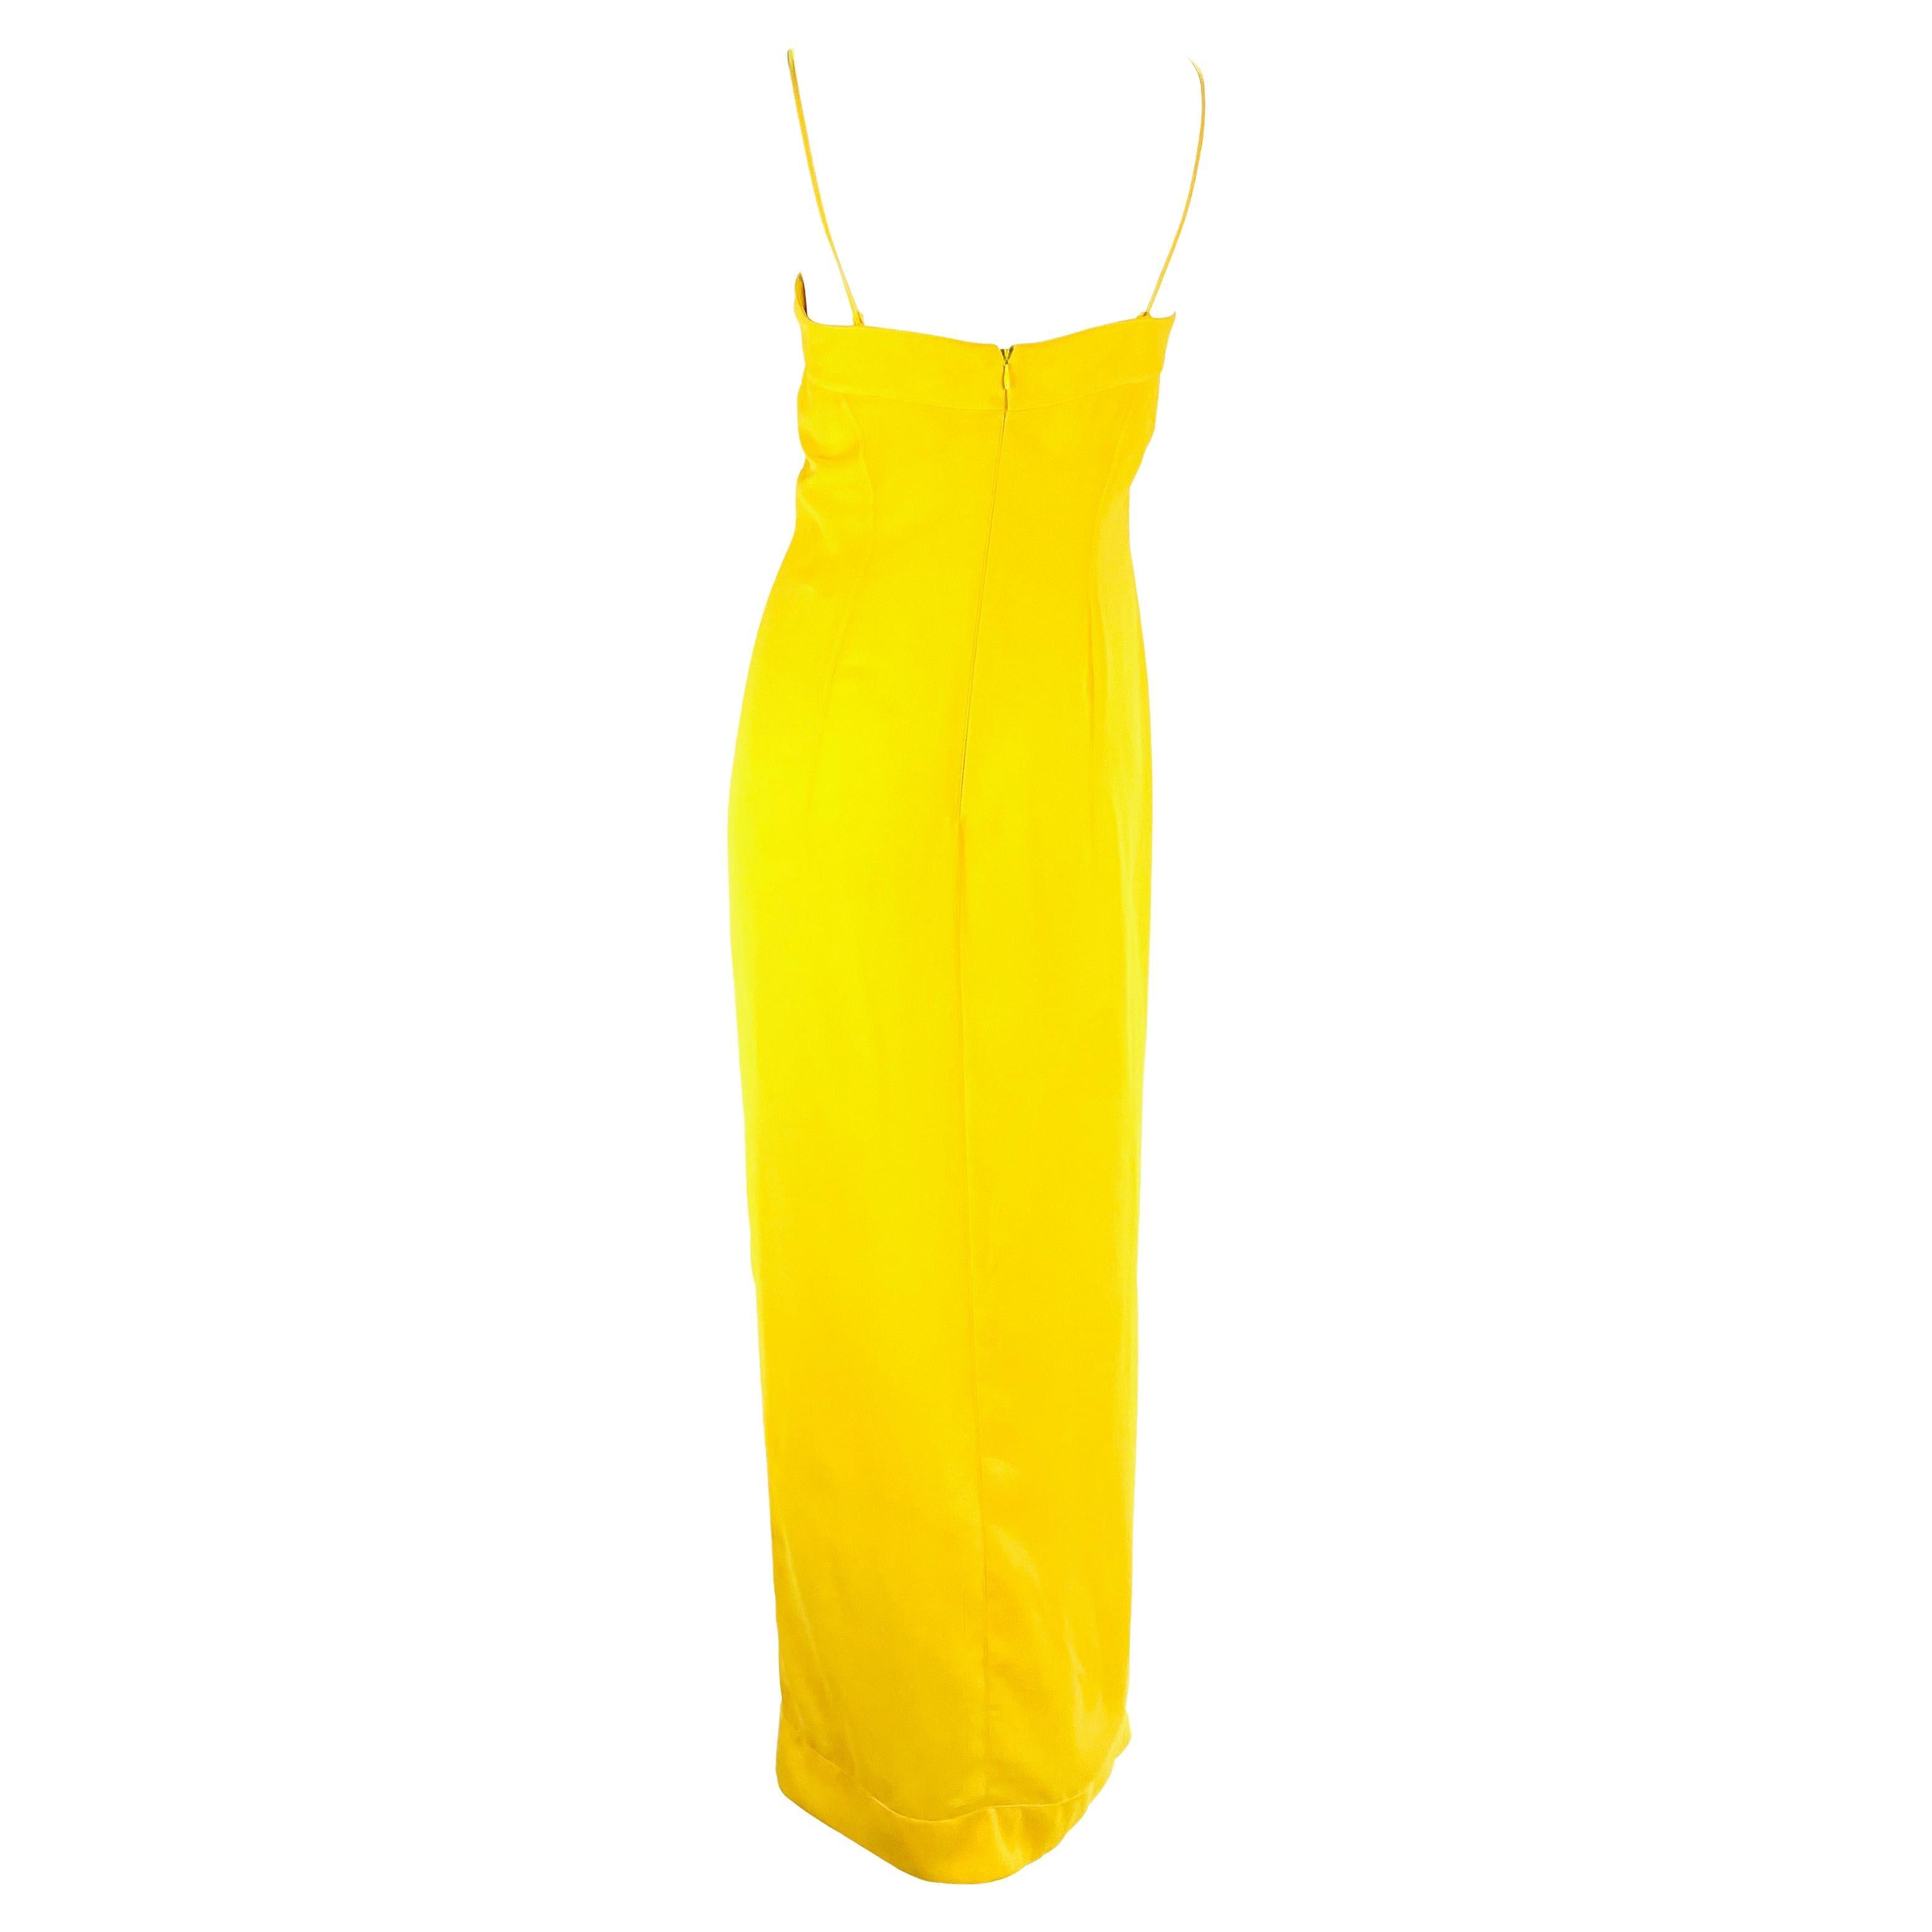 Women's S/S 2000 Thierry Mugler Canary Yellow Chiffon Dress with Matching Shawl For Sale